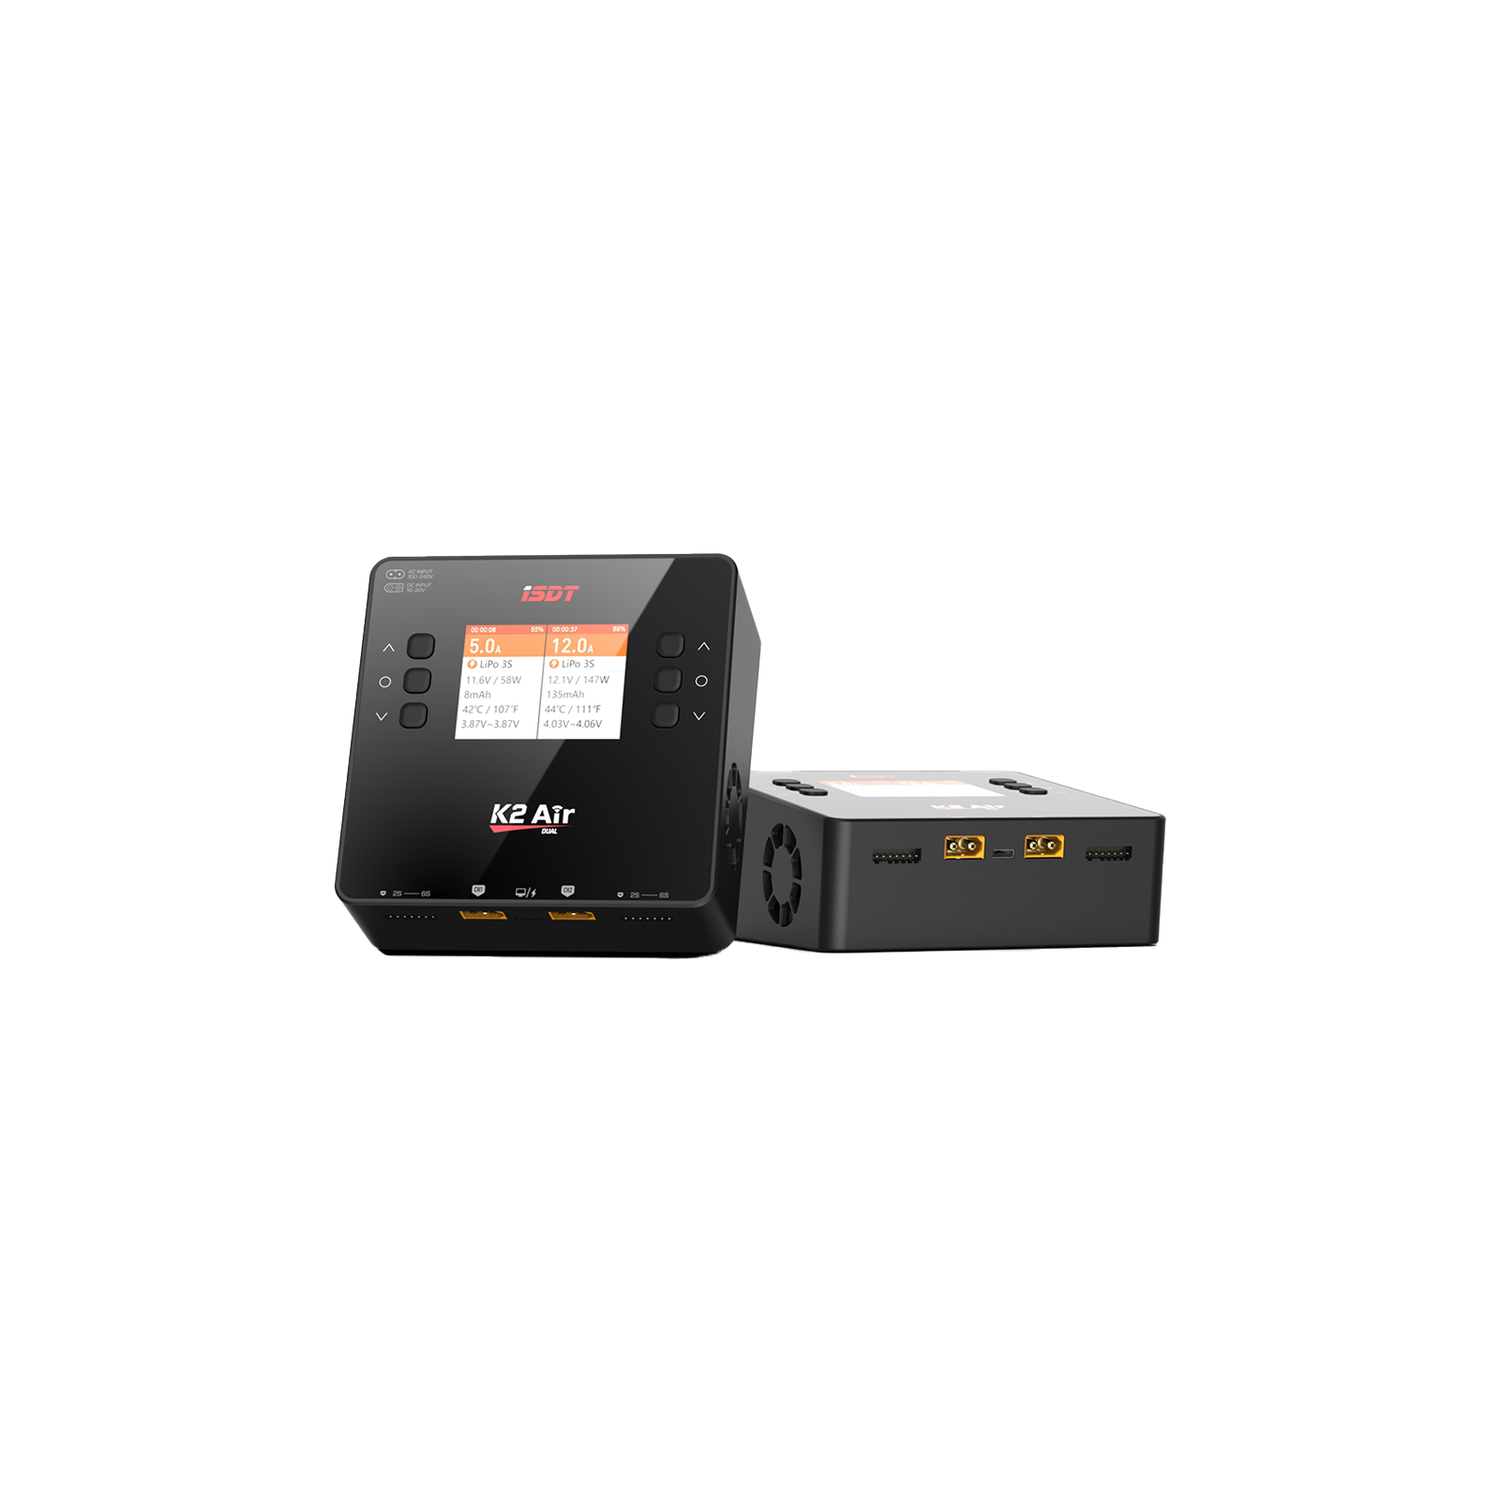 K2 Air Bluetooth Control remoto Lipo Charger, AC/DC 200W/500WX2 20A Smart Balance descargador/cargador